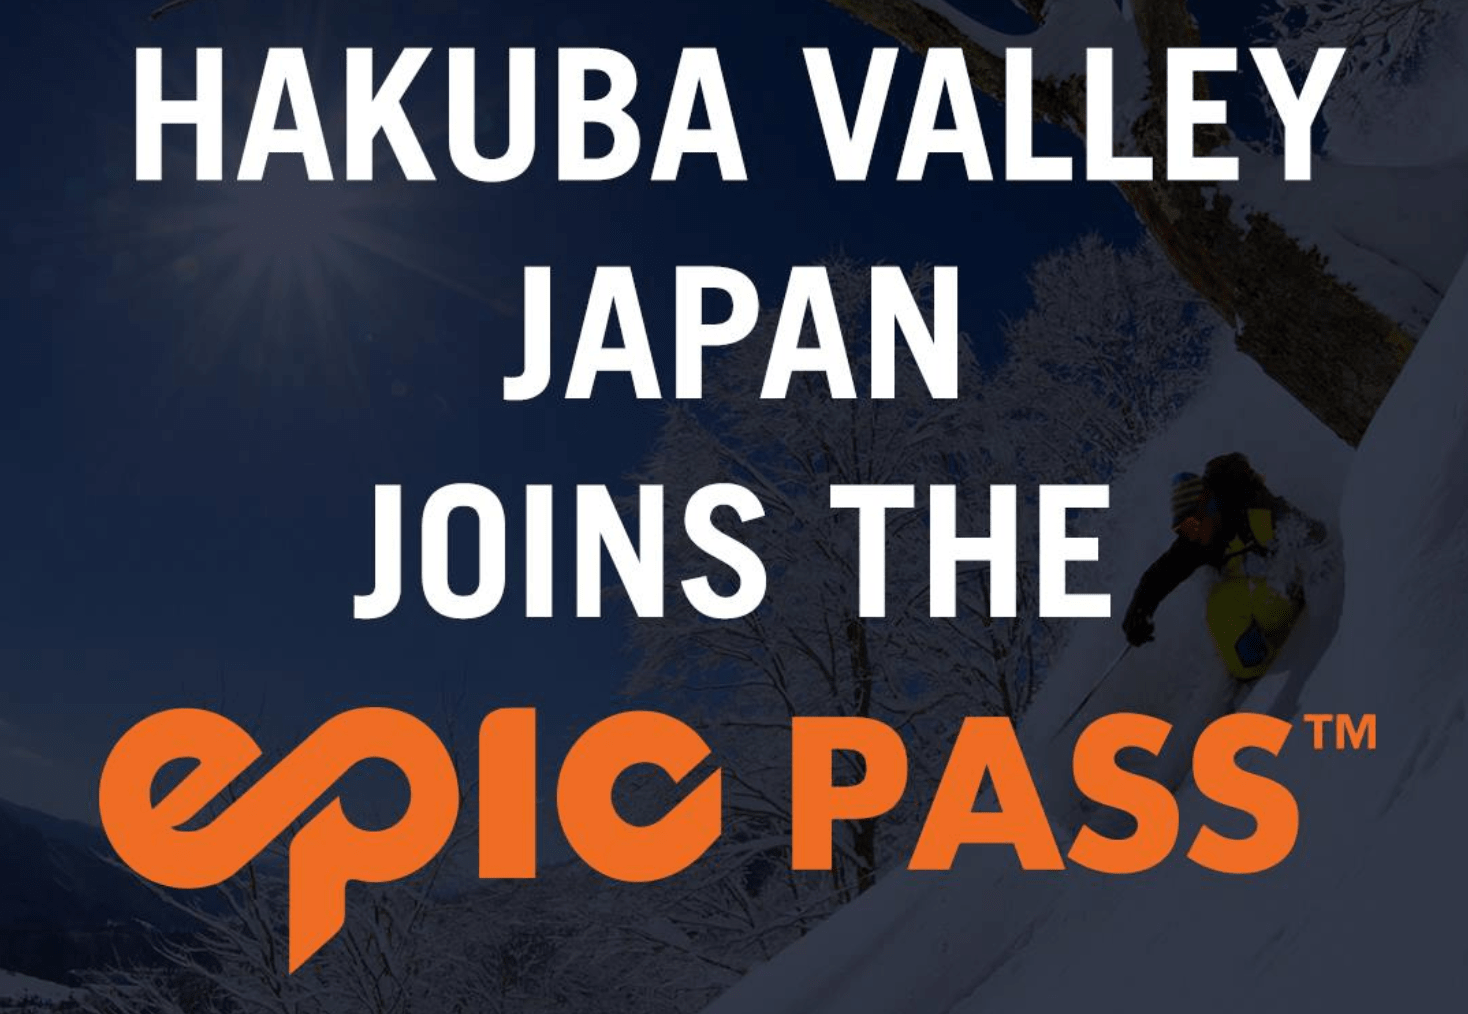 epic pass, hakuba valley, hakuba